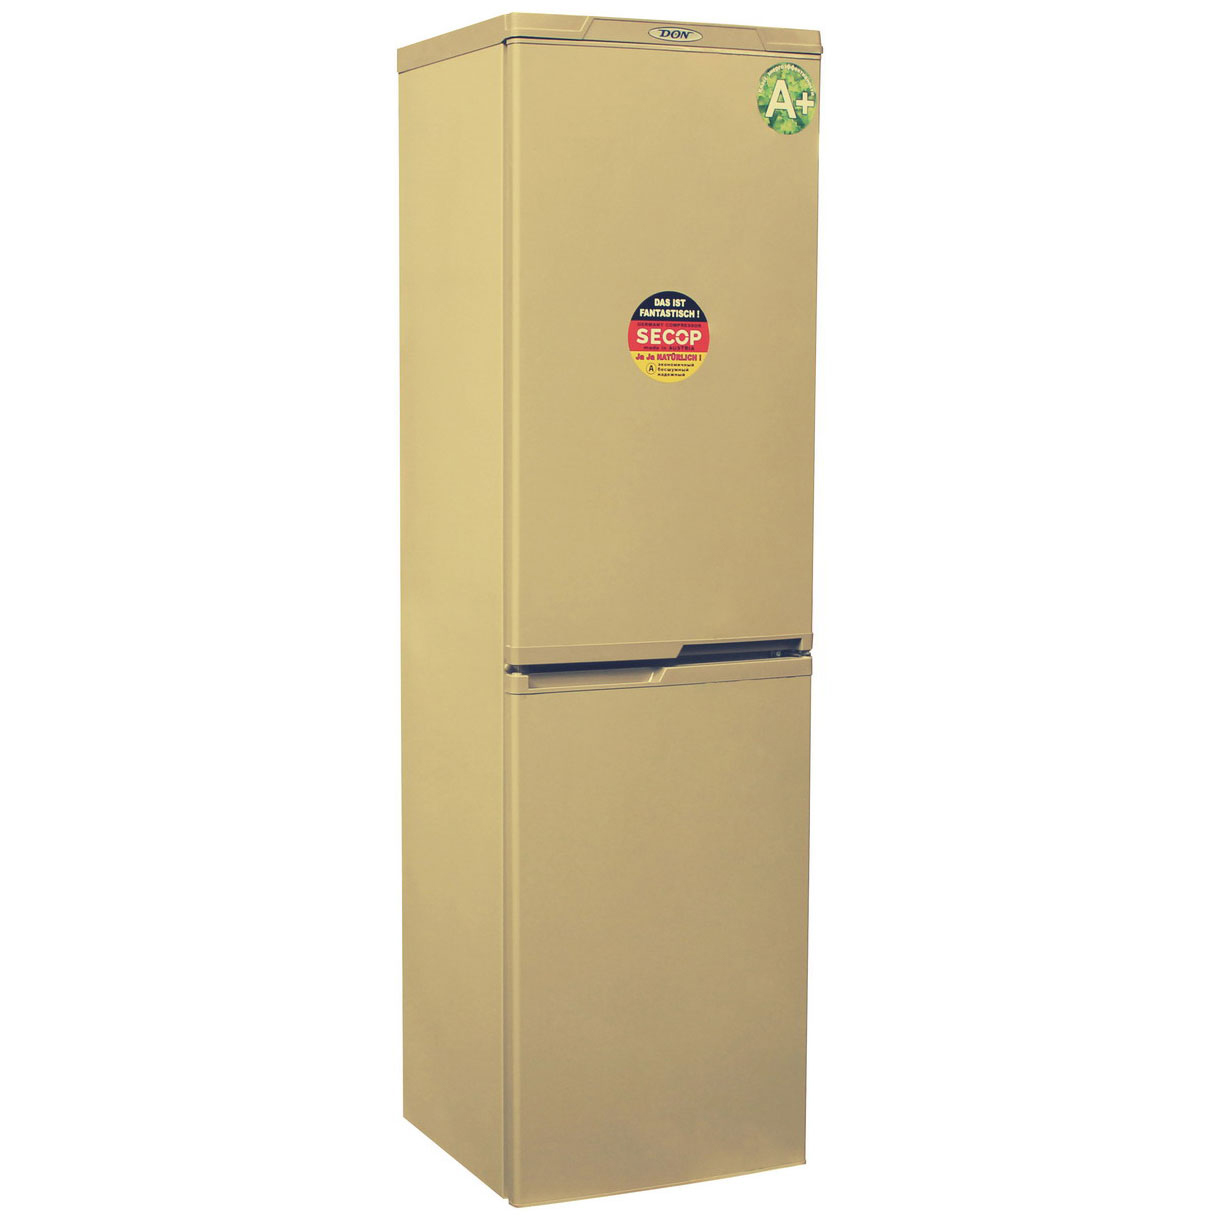 Холодильник DON R-297 Z золотистый холодильник don r 295 z двухкамерный класс а 346 л золотистый